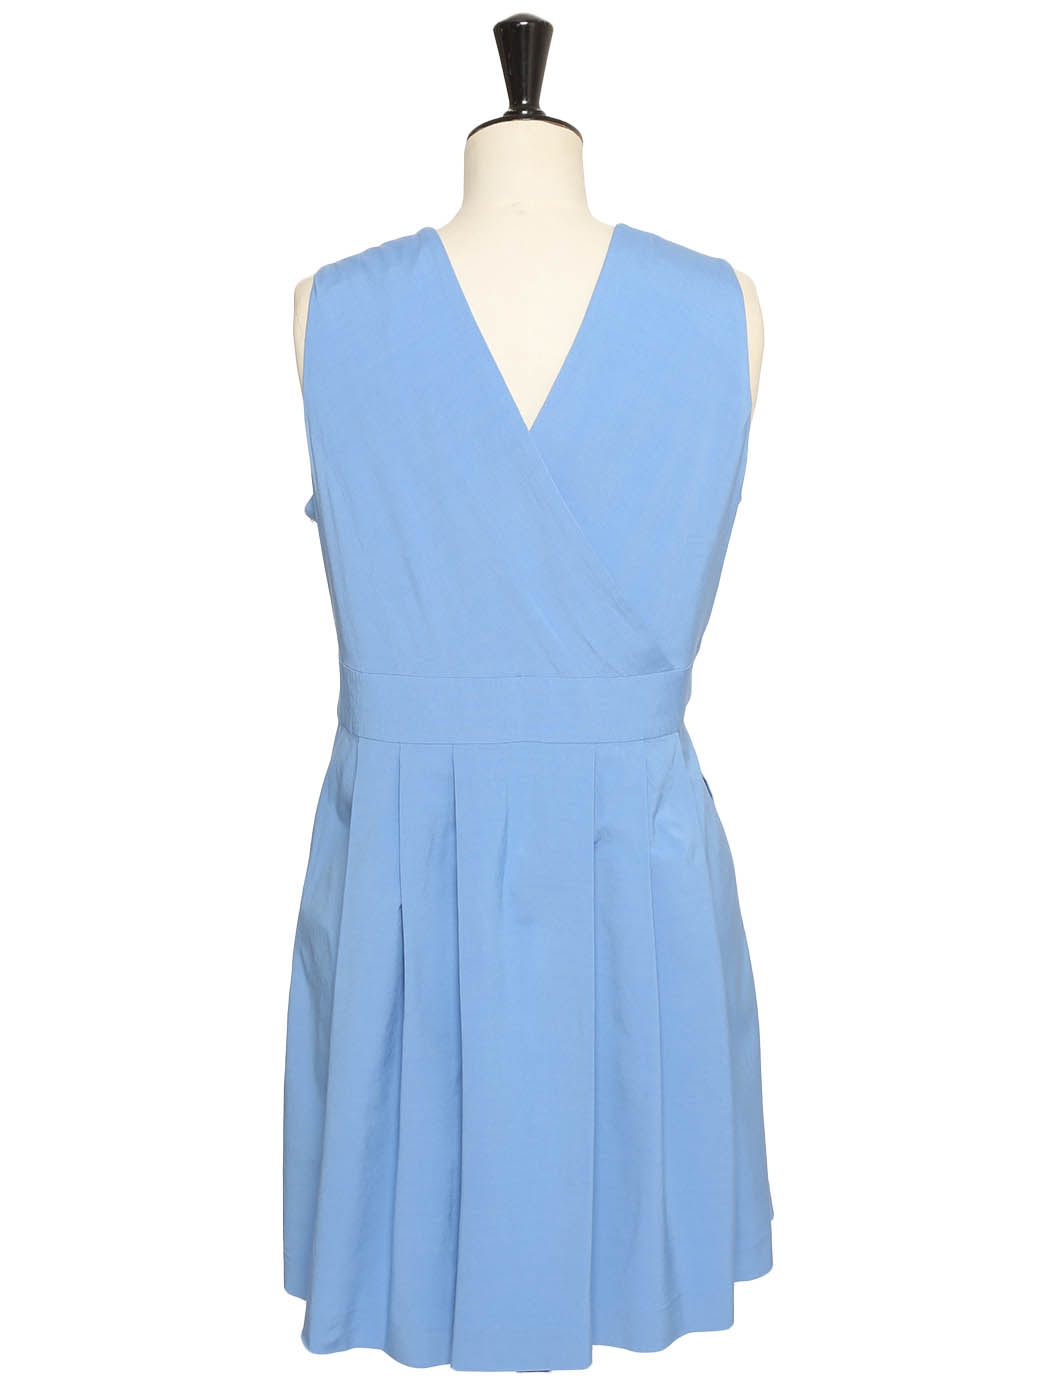 Boutique ESCADA Light large 40/42 price Retail Size blue dress €1300 satin neckline strap V